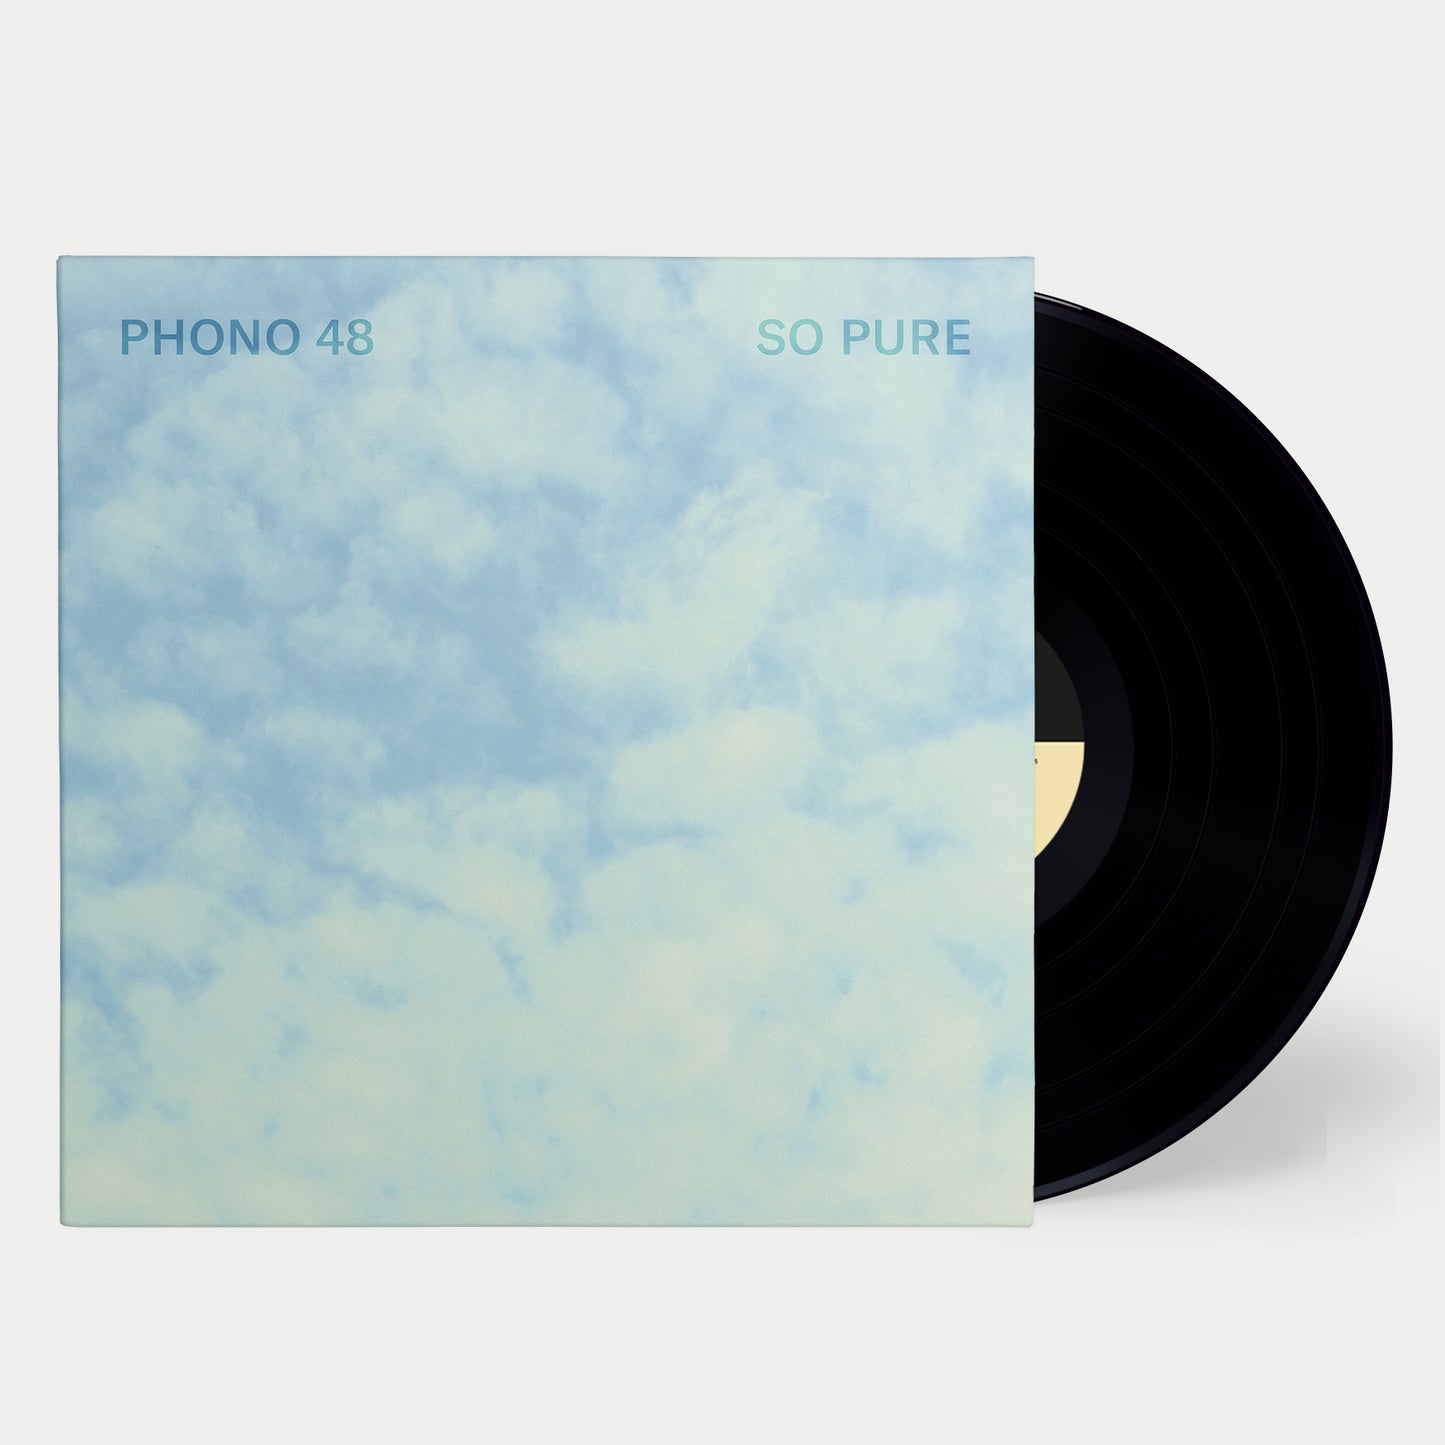 Phono 48 - So Pure 12" single